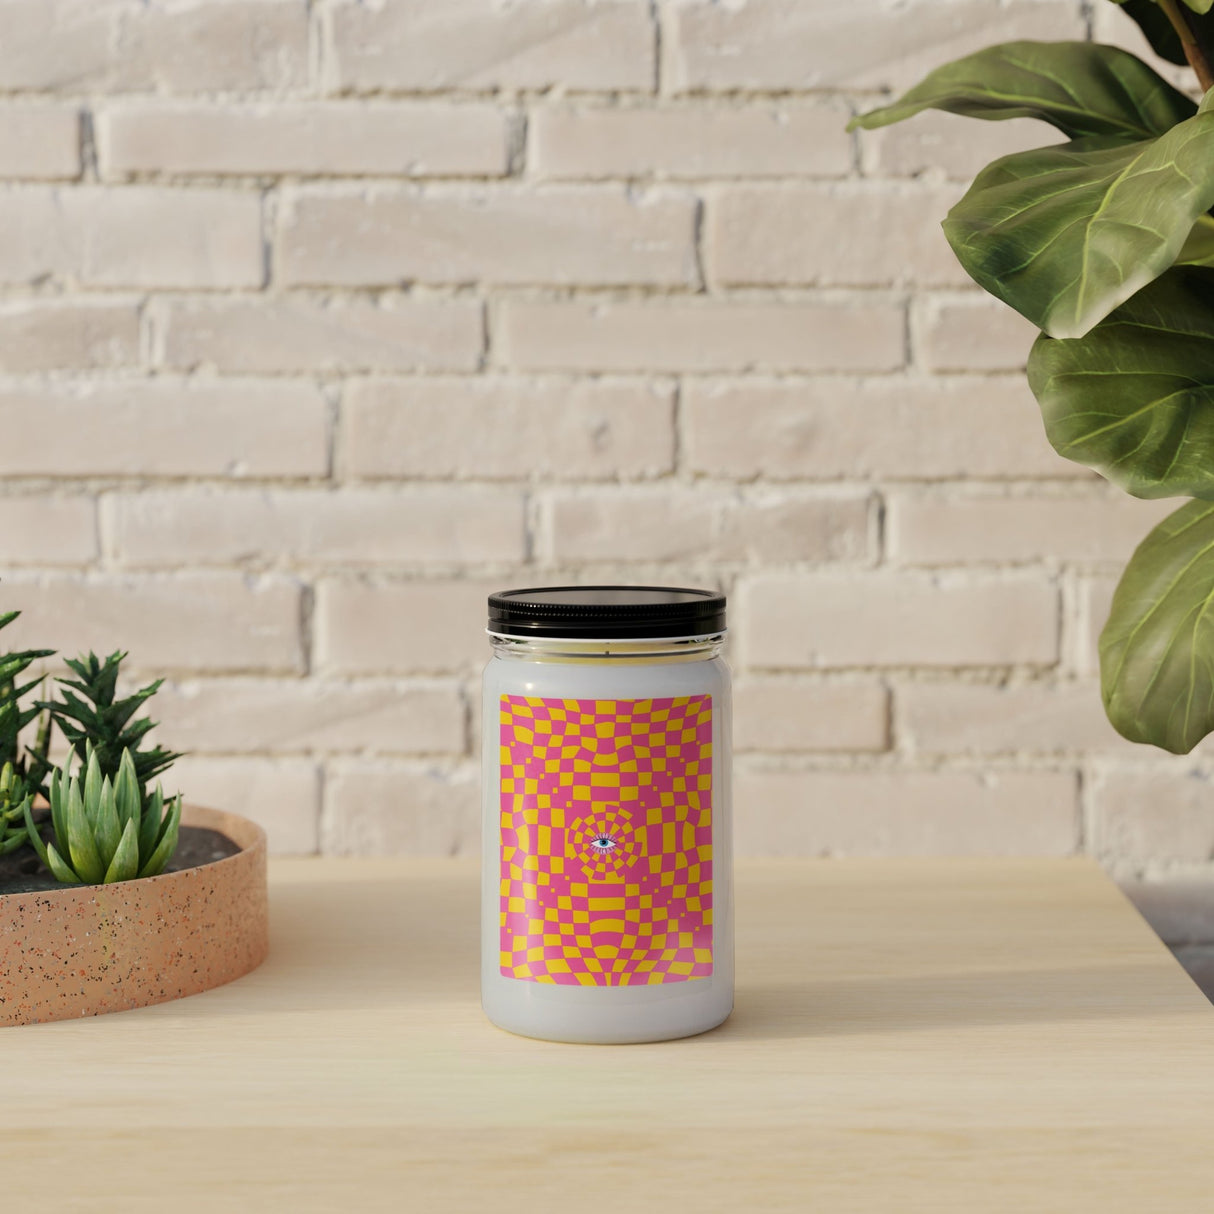 Vivillus Scented Candle in Mason Jar: Strawberry Lemonade - Candlefy